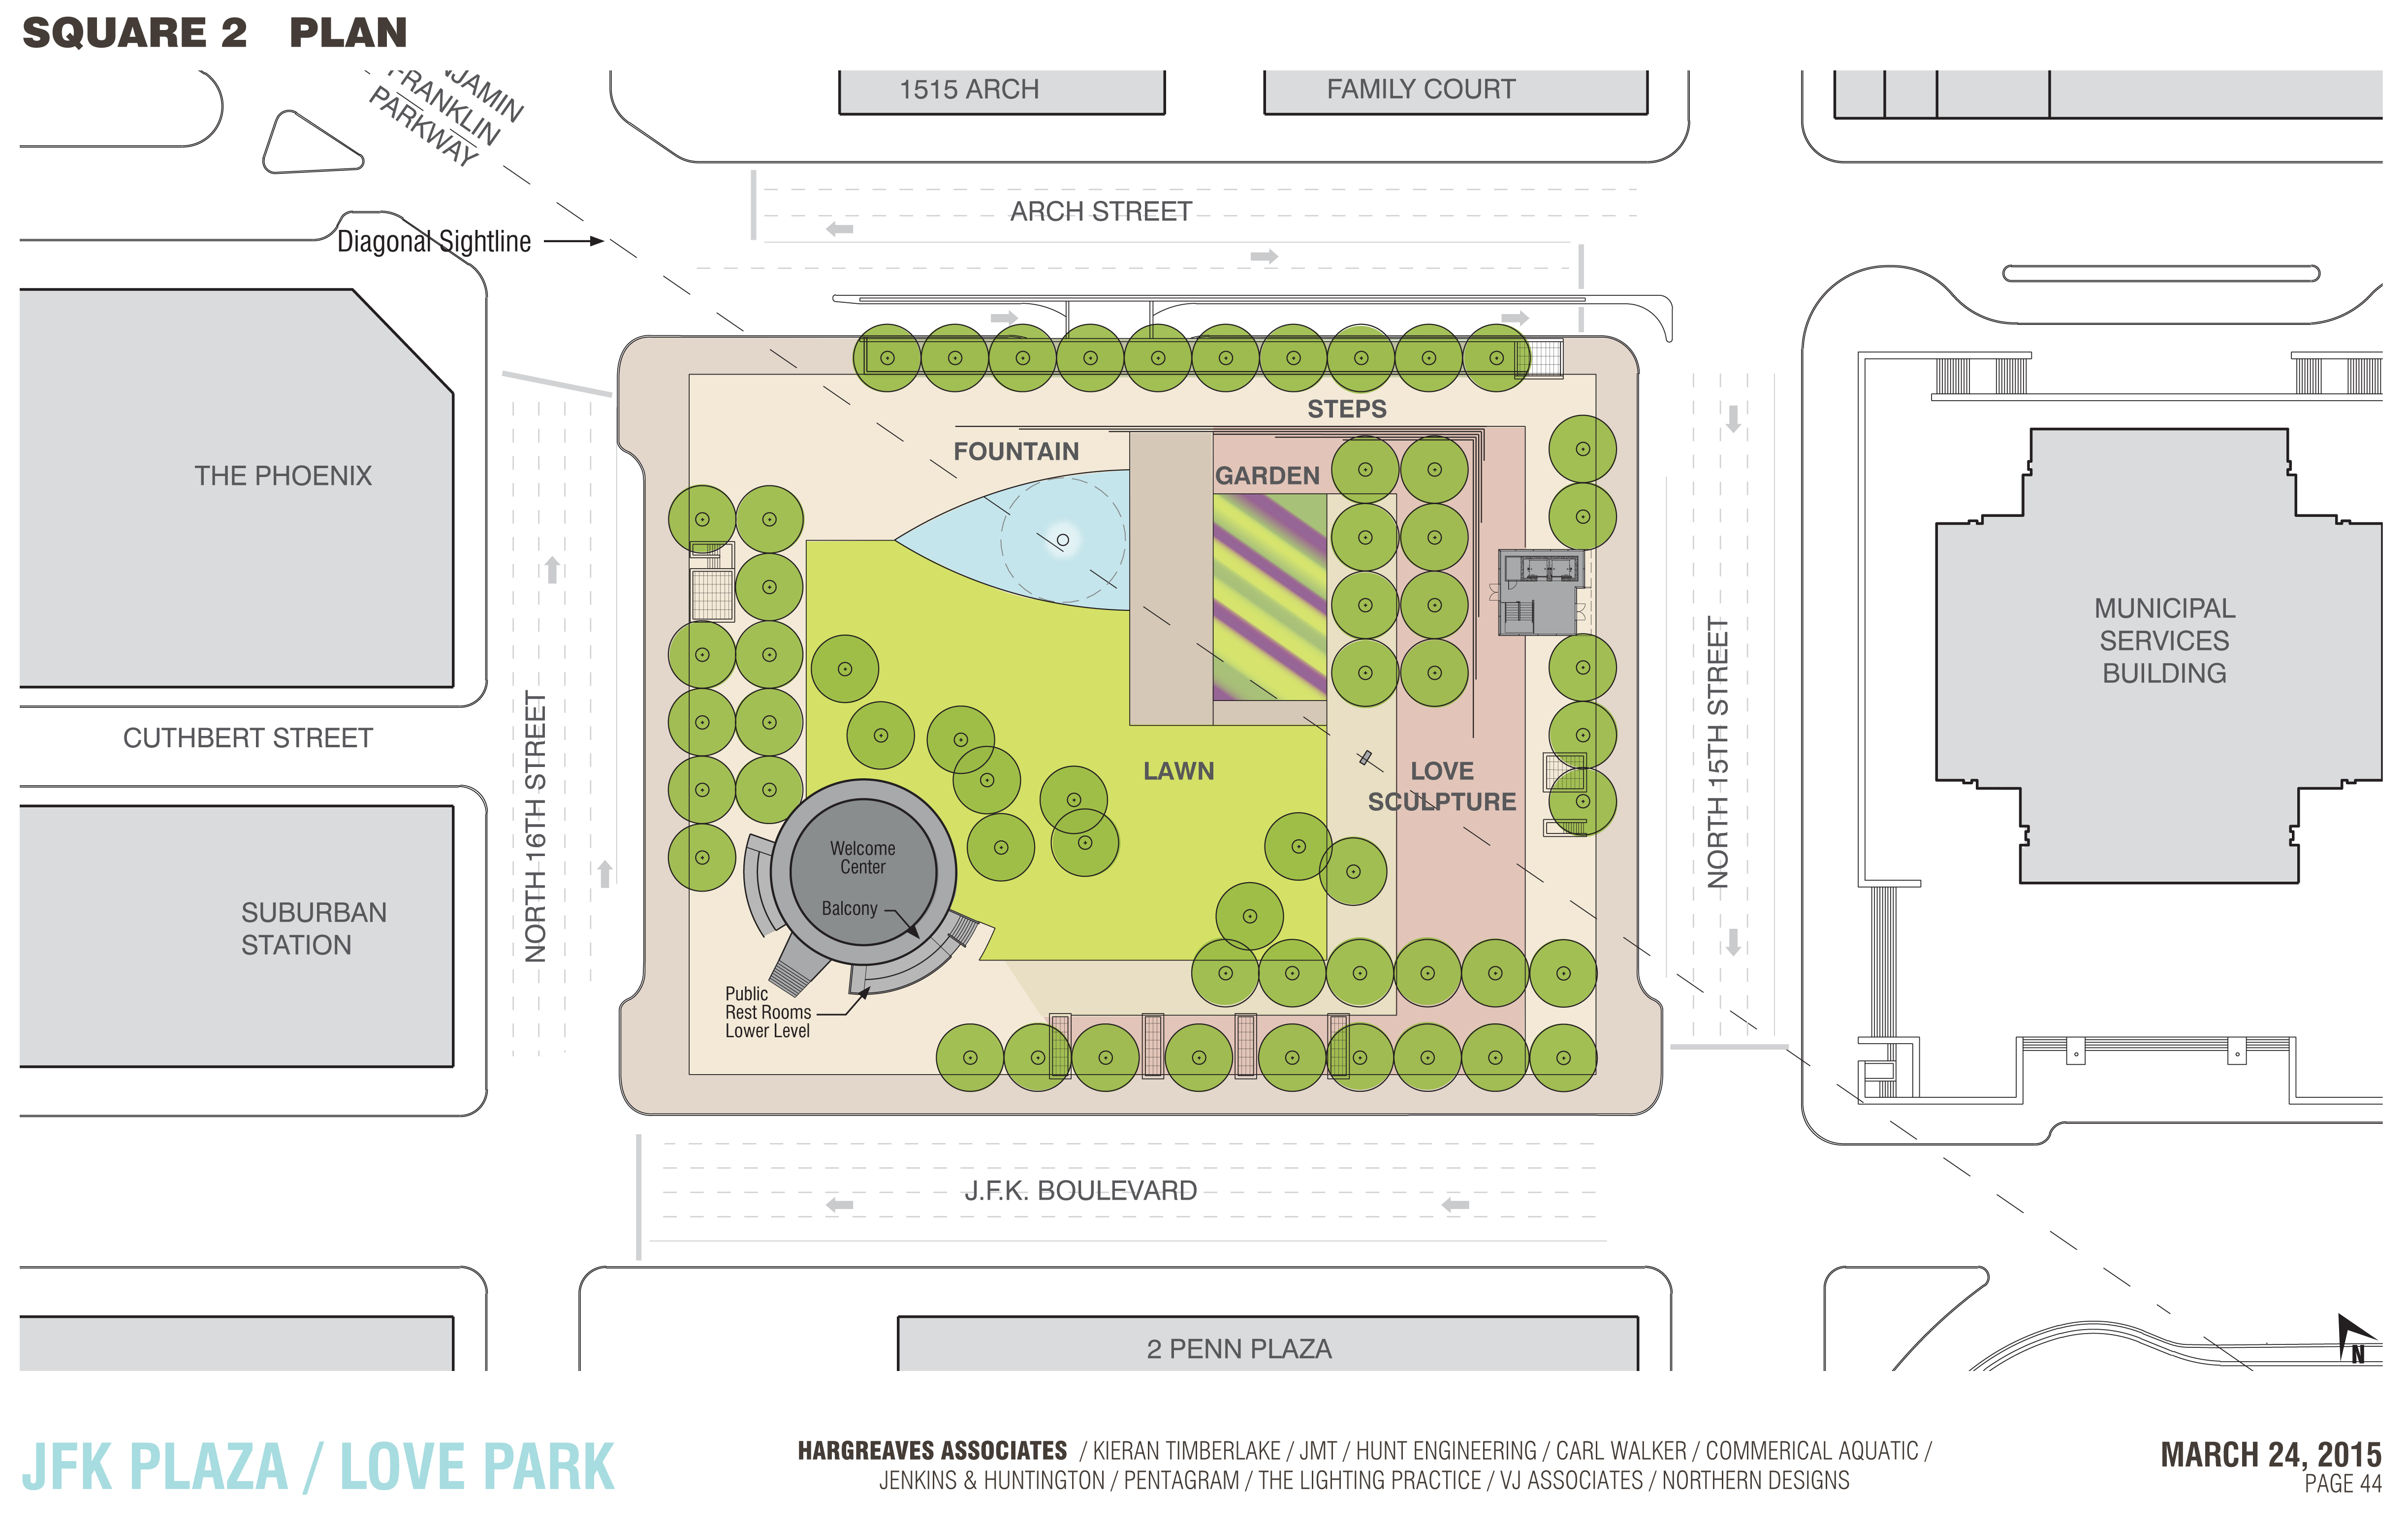 JFK Plaza / LOVE Park Square 2 Plan Rendering, March 2015 | Hargreaves Associates